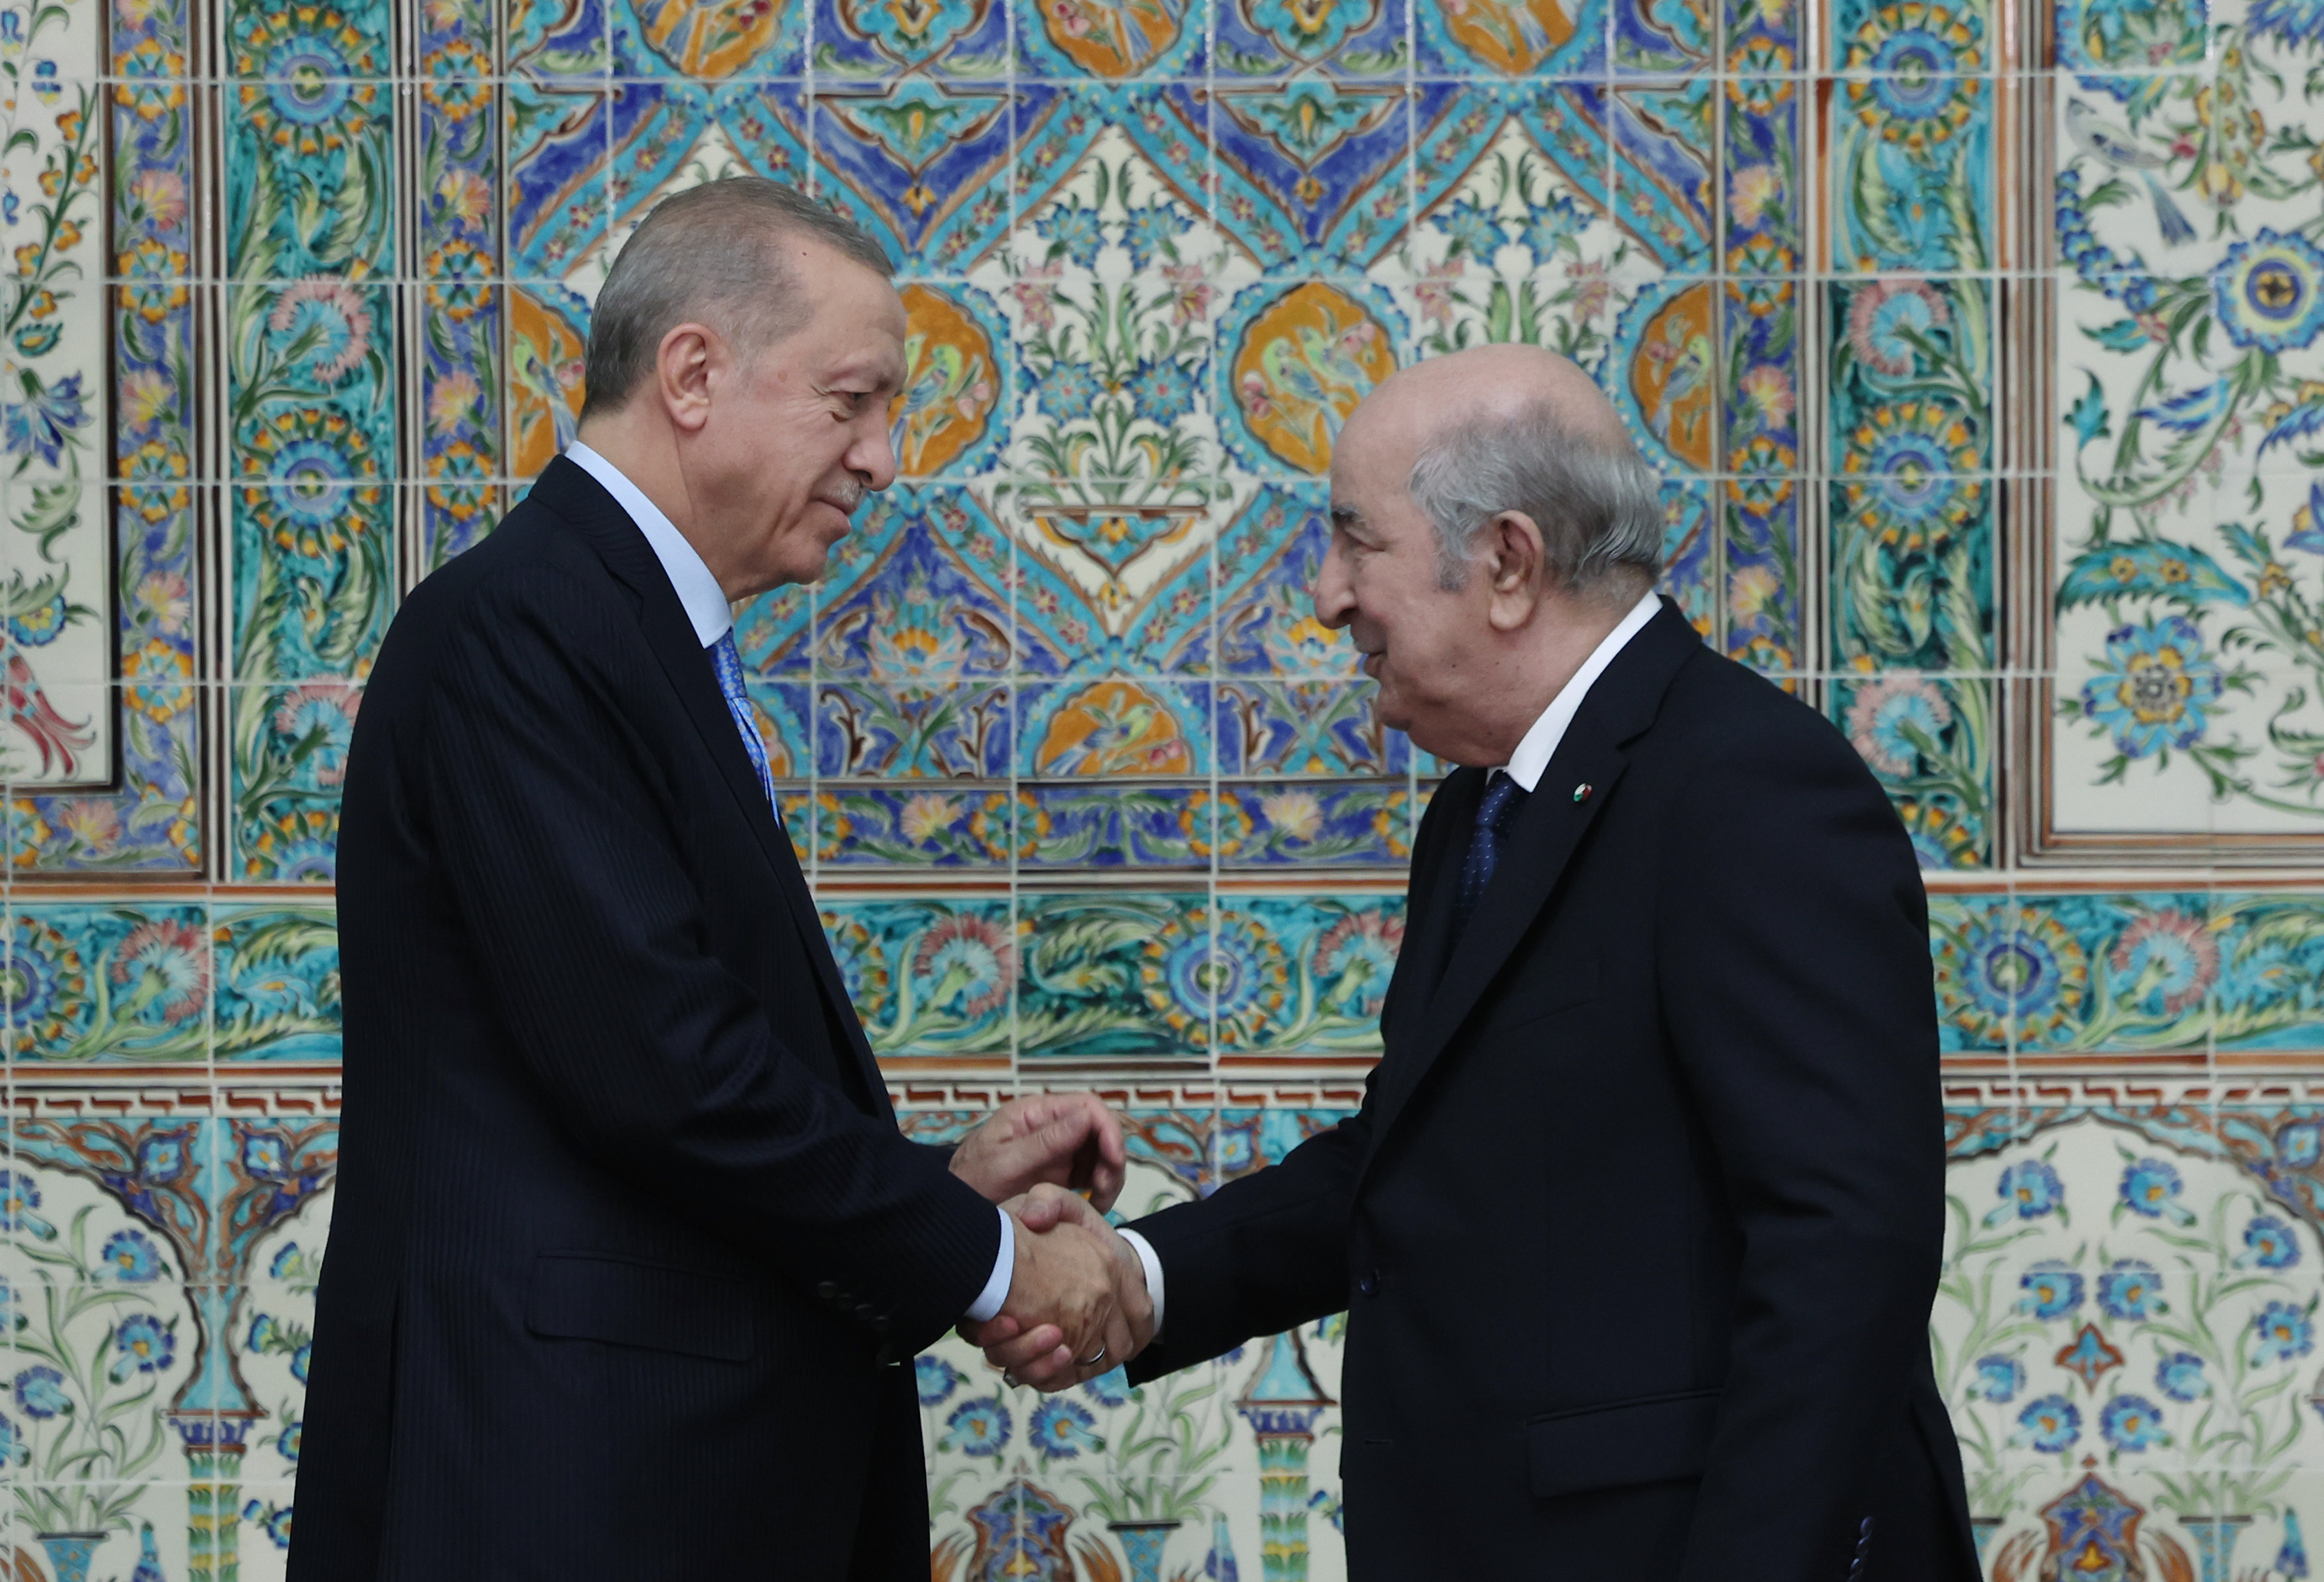 aa-20231121-32984270-32984269-turkish-president-recep-erdogan-received-by-algerian-president-tebboune.jpg